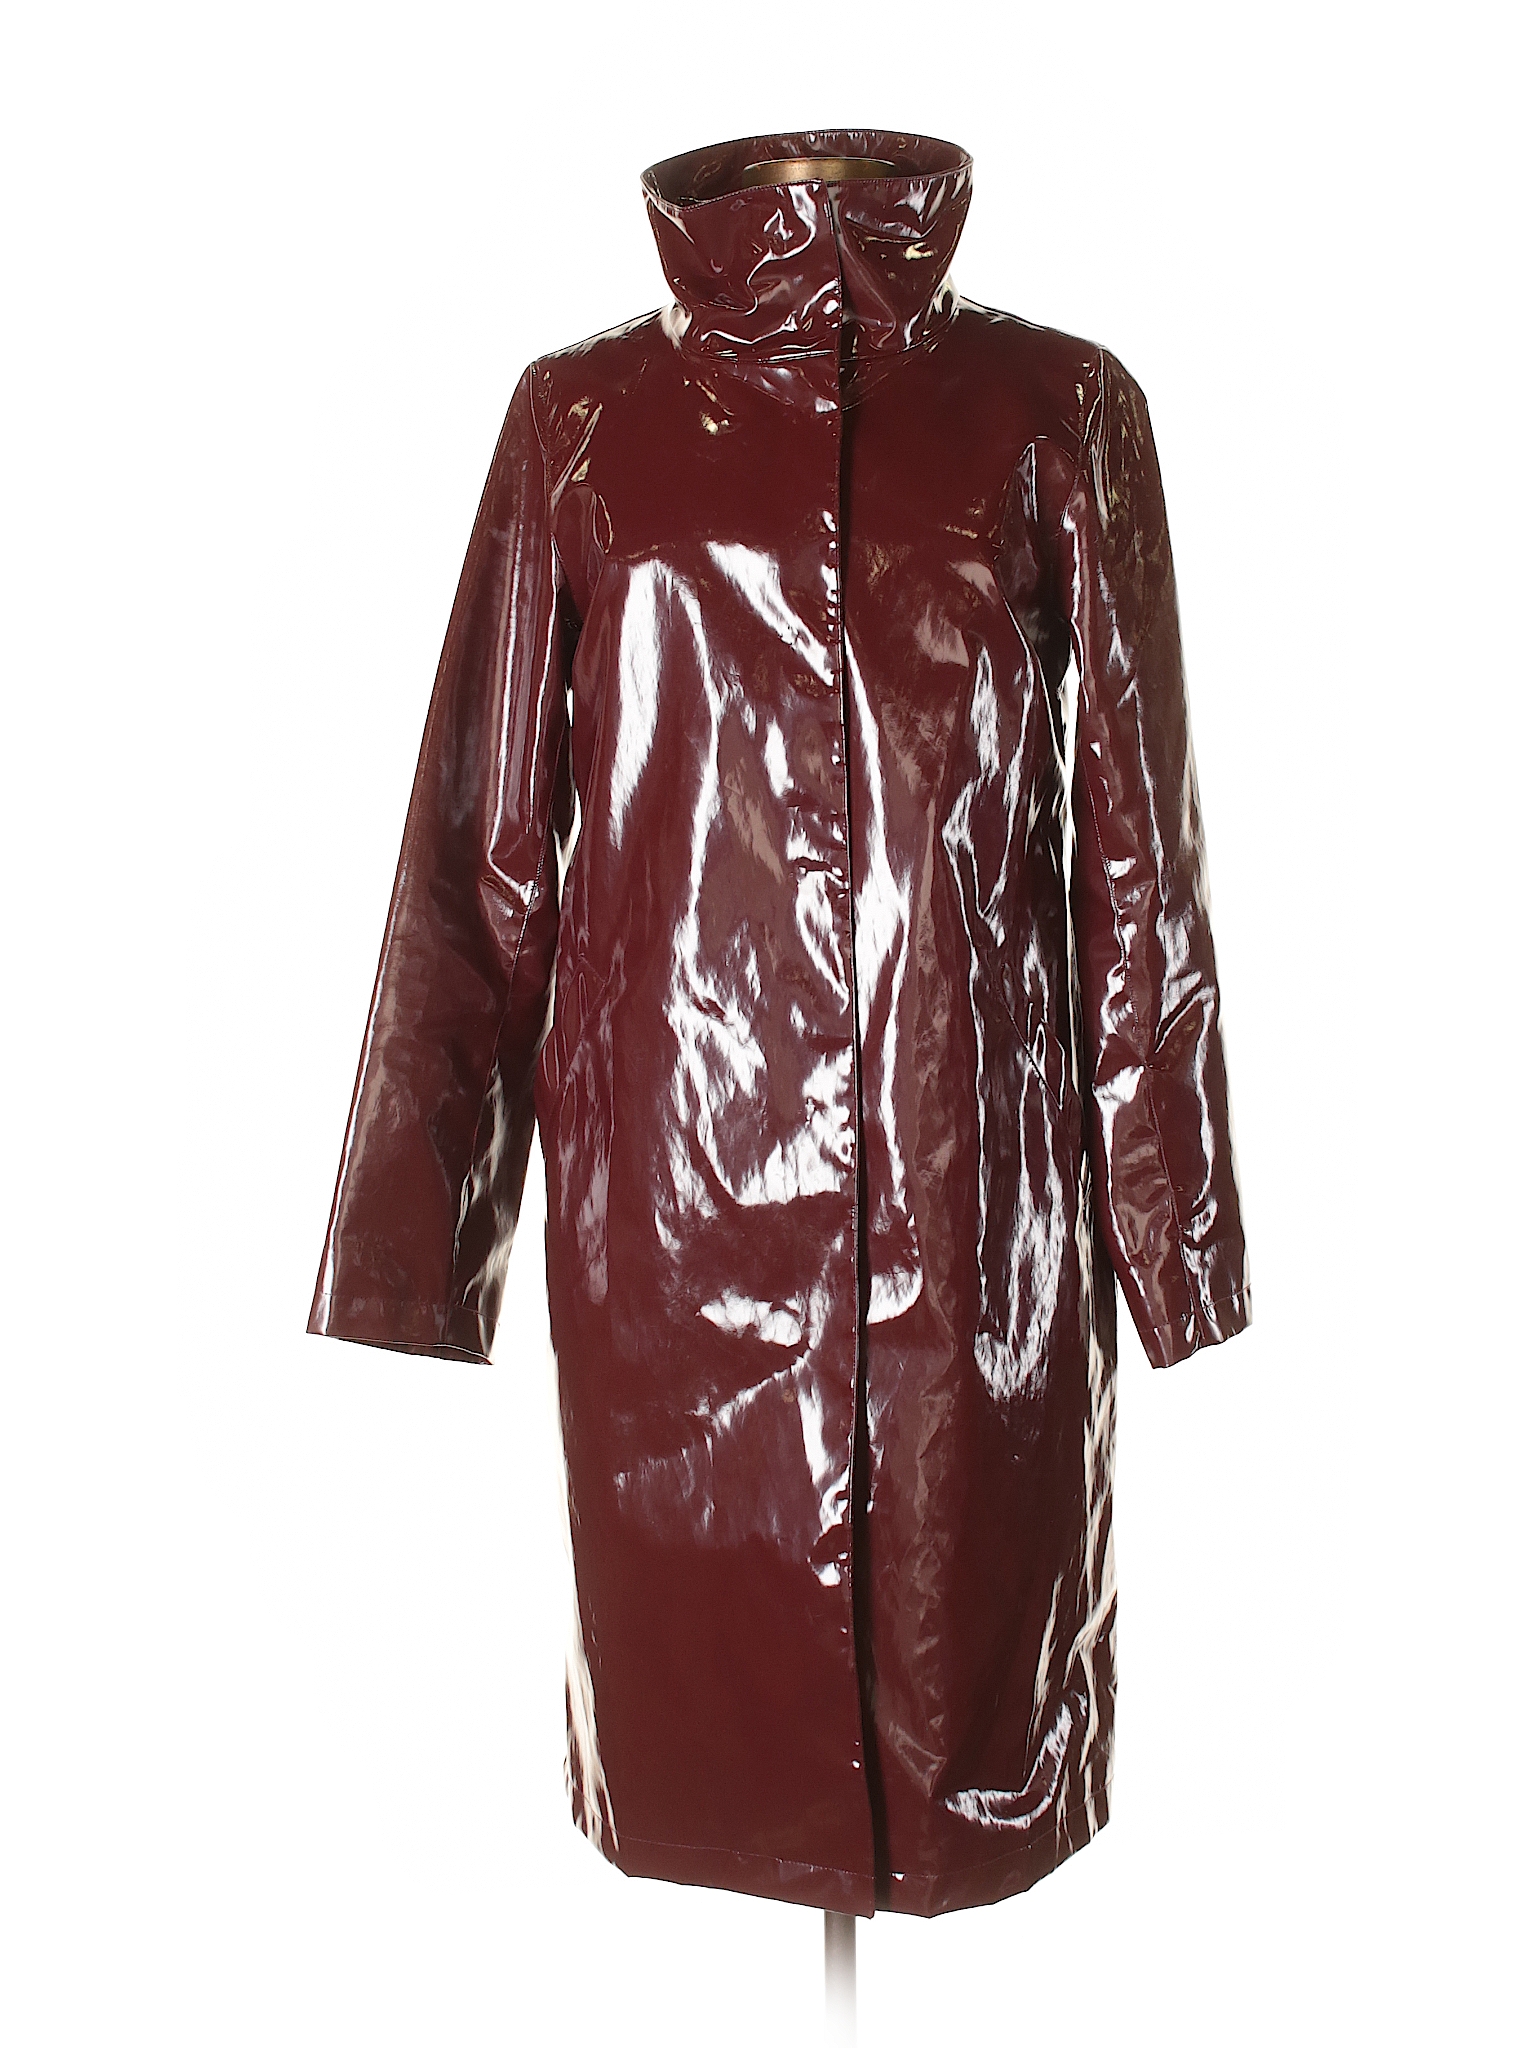 Jane Post 100% Polyurethane Solid Burgundy Raincoat Size S - 81% off ...